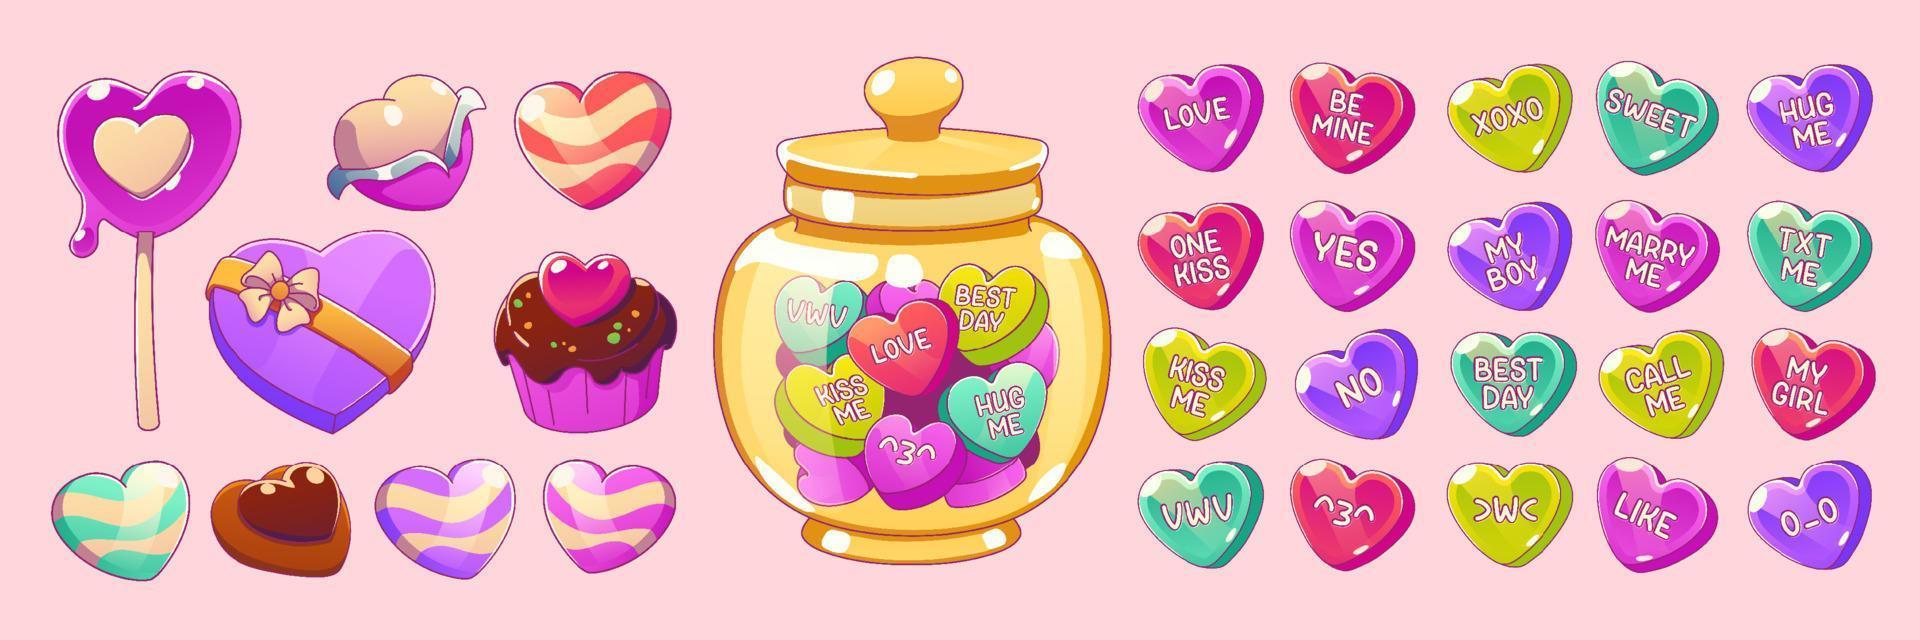 Valentine day heart candies, conversation sweets vector